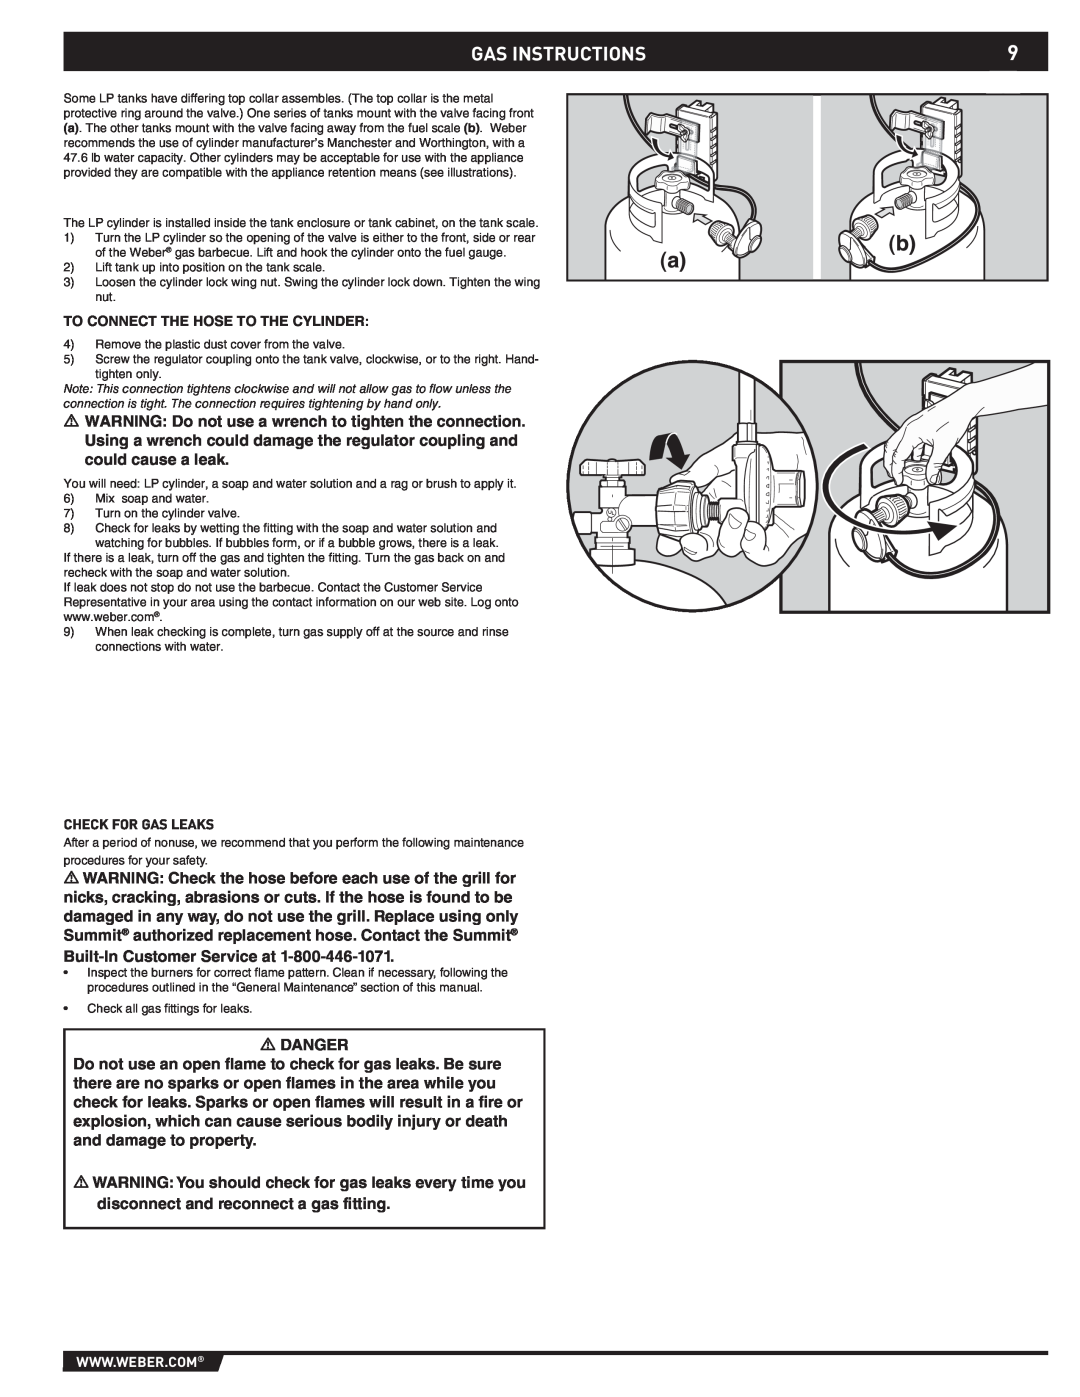 Weber 43176 manual Gas Instructions, Danger 